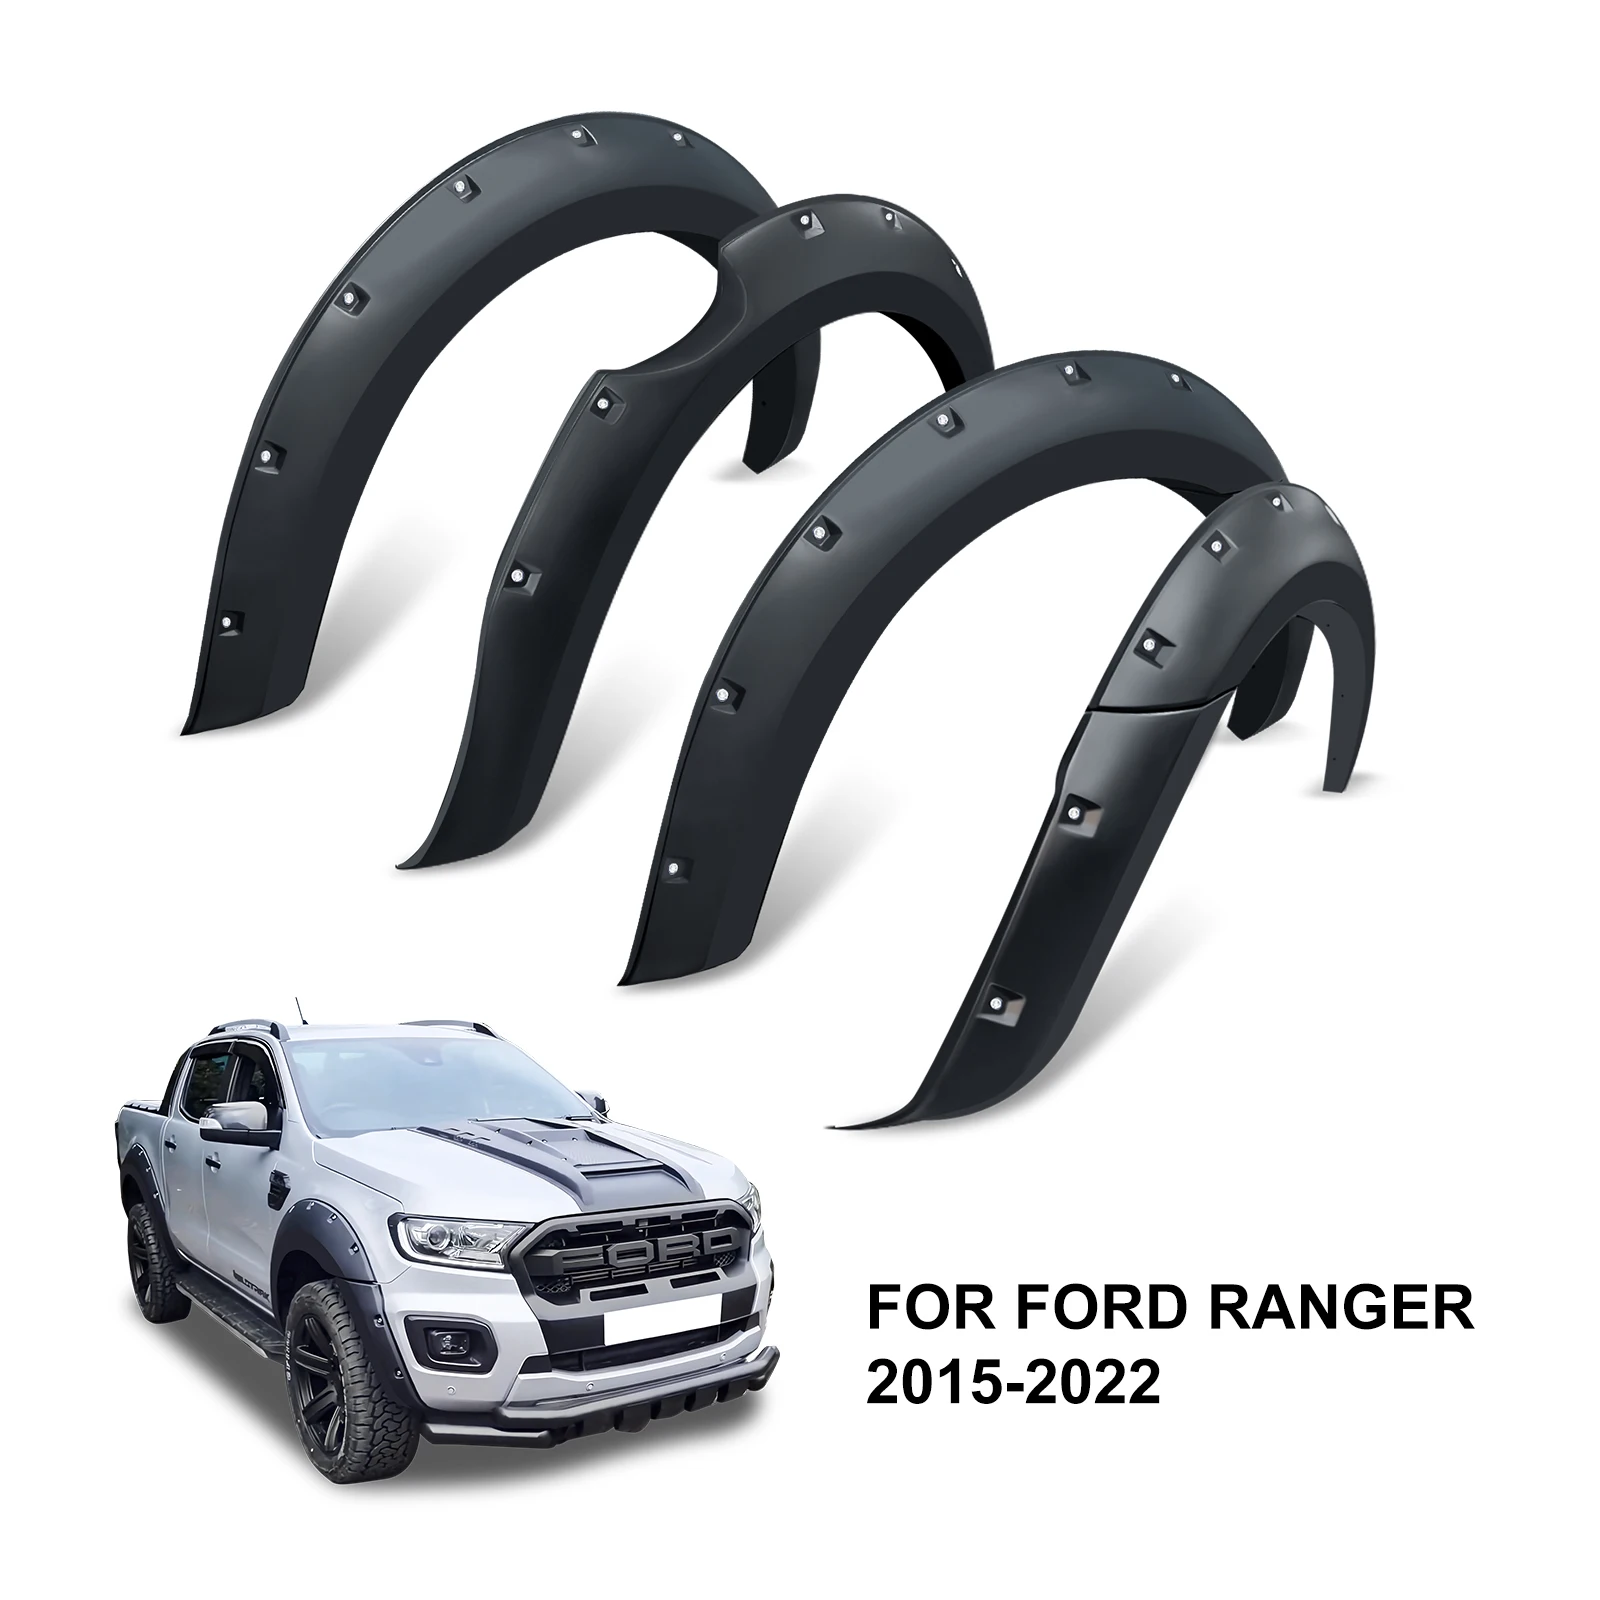 Ford Ranger T7 Wildtrak 2015-2018 Wide Wheel Arch Fender Flares Kit Bl –  shark automotive